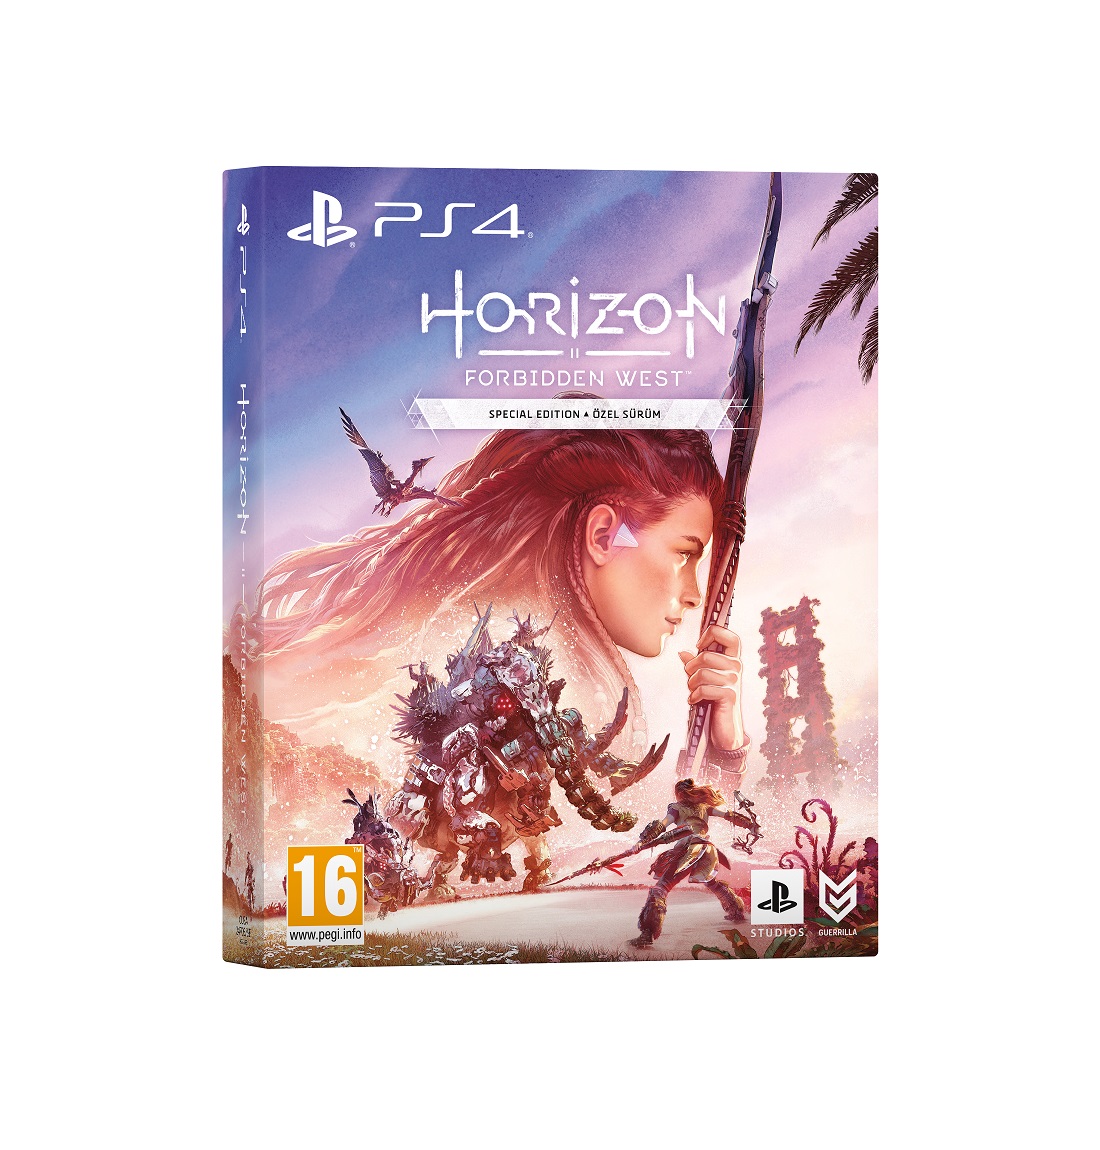 PS4 Horizon Forbidden West Special Edition - Türkçe Altyazılı